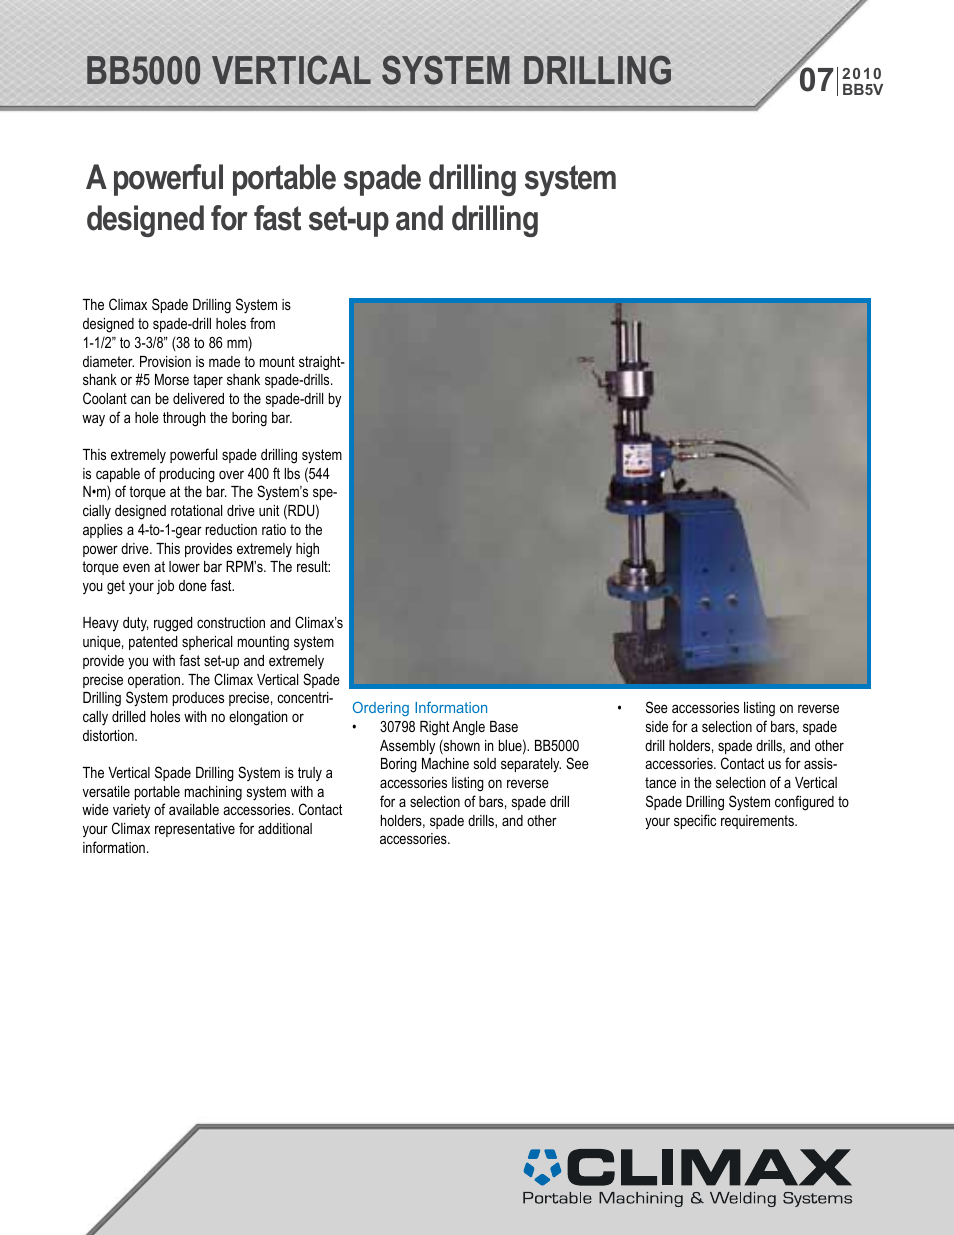 BB5000 Vertical Spade Drilling Accessory